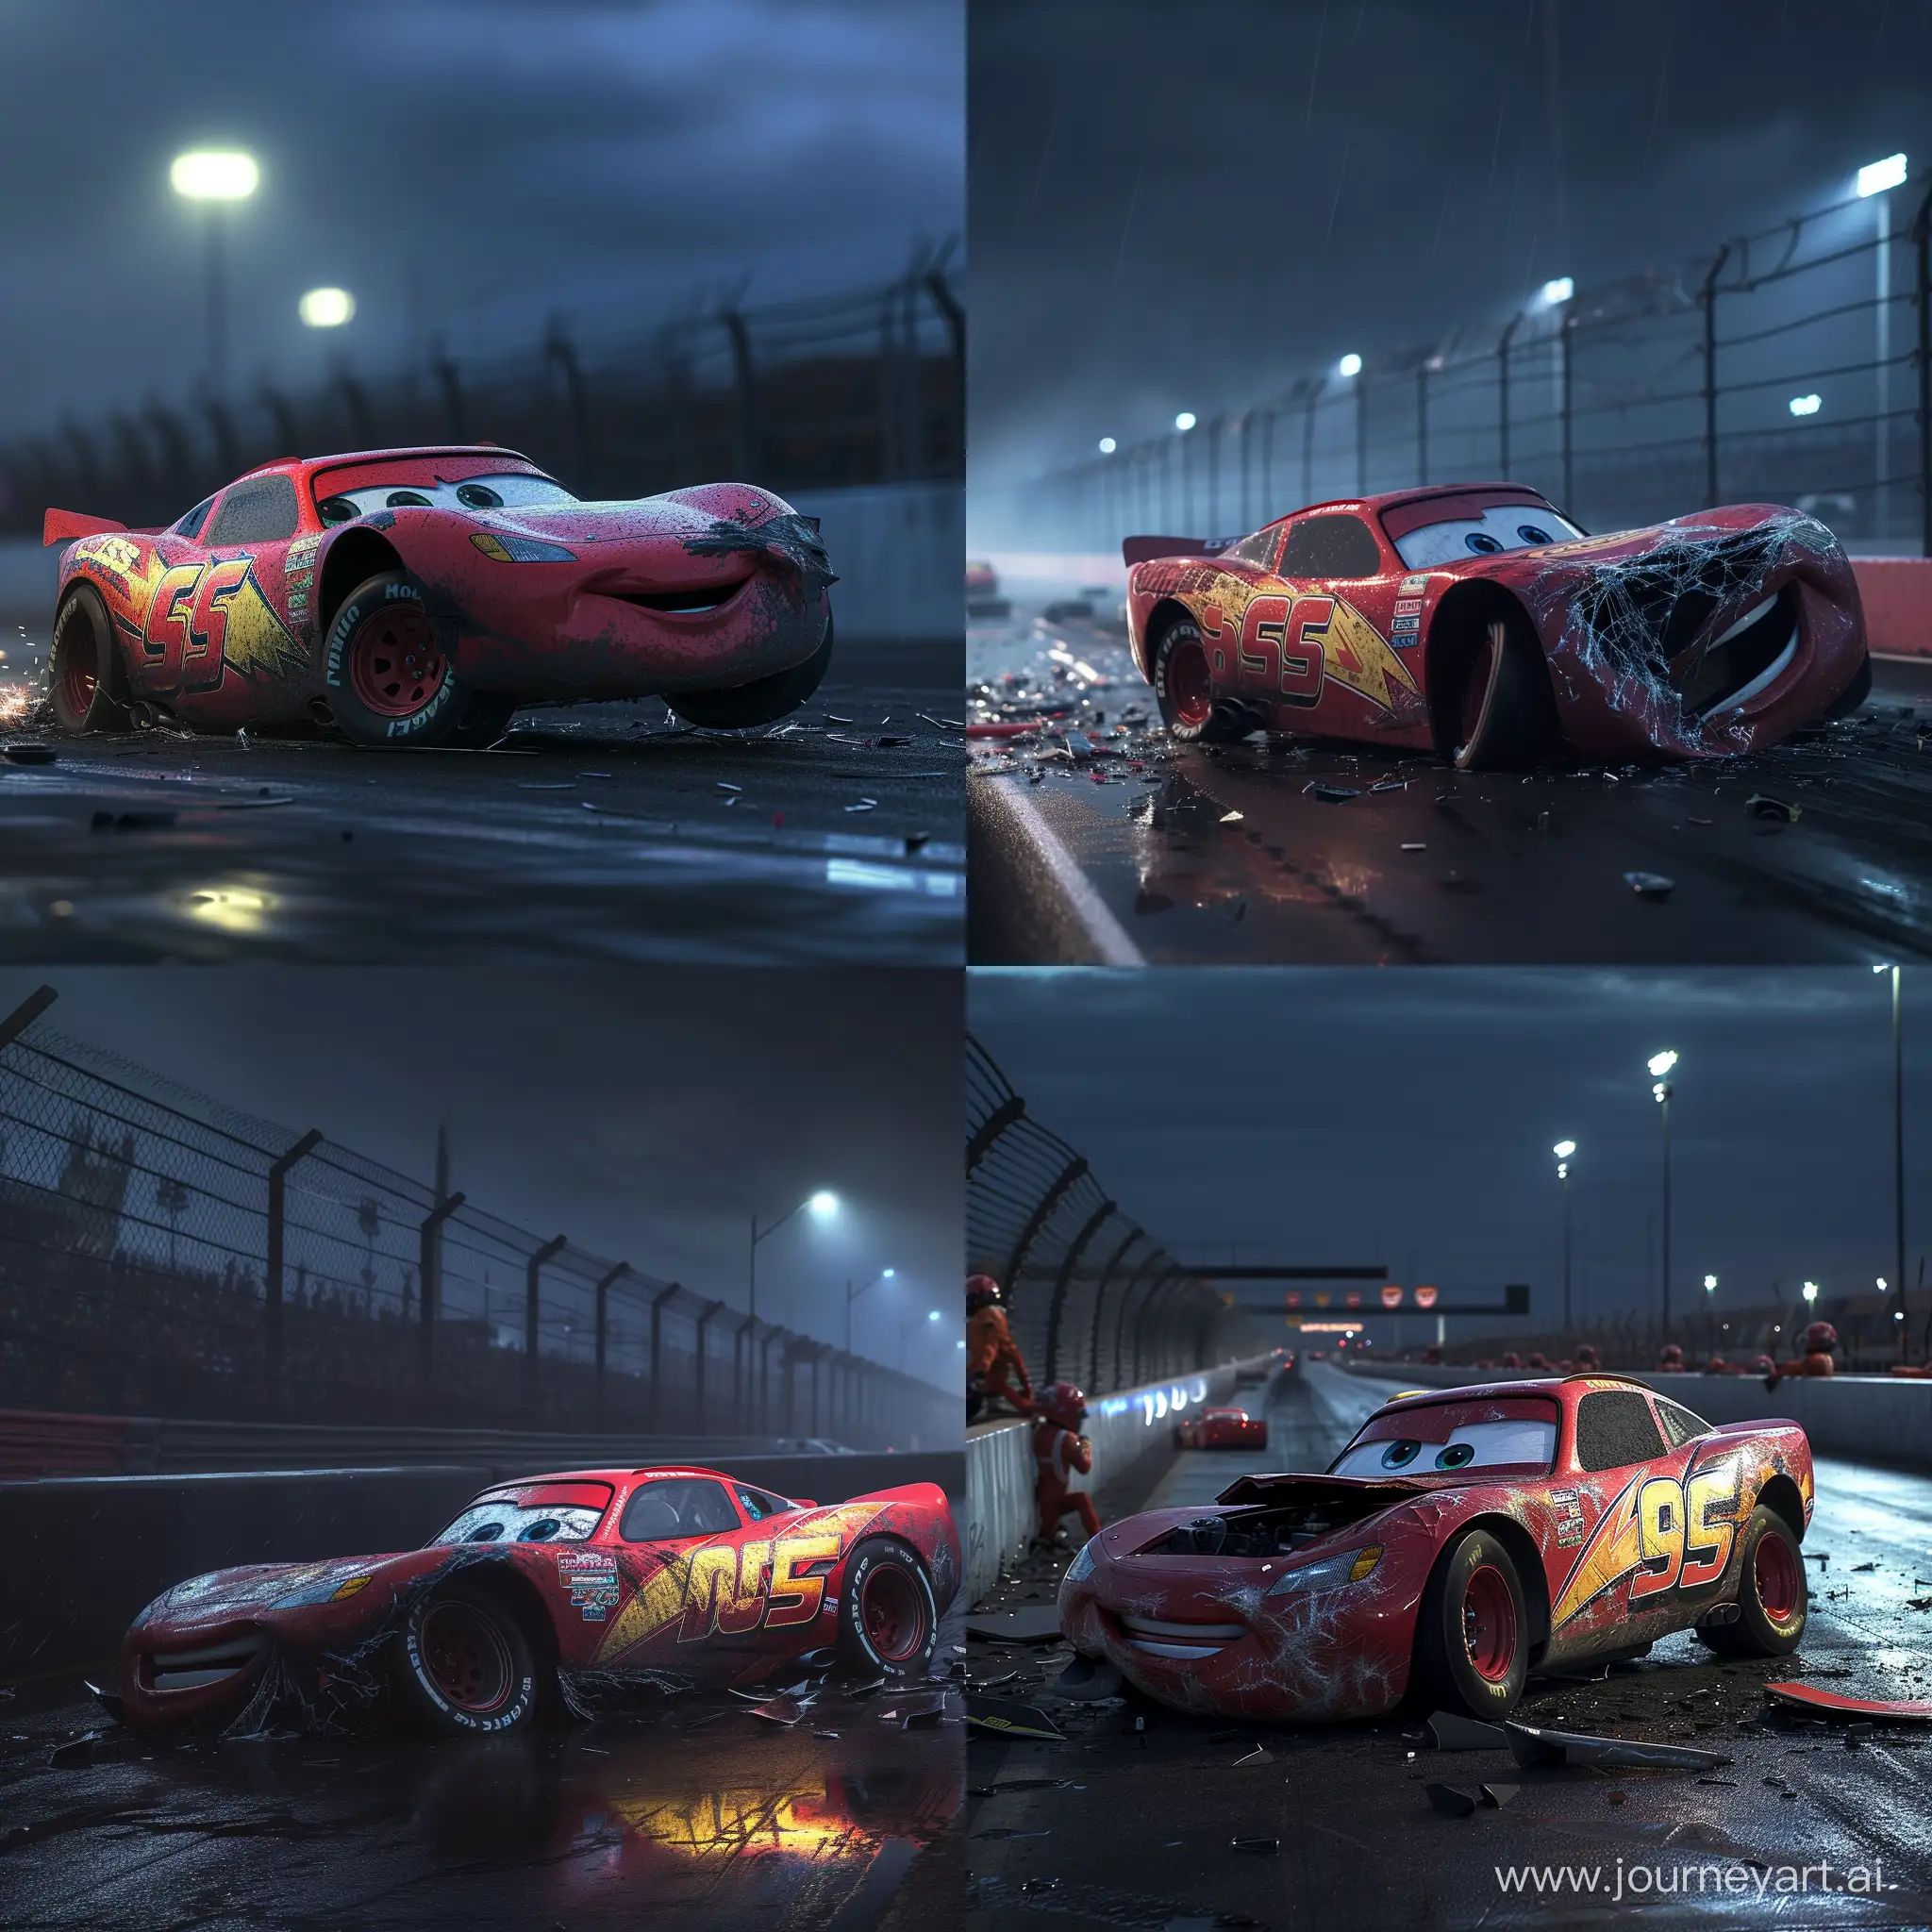 Lightning-McQueen-Racing-Accident-in-the-Dark-Night